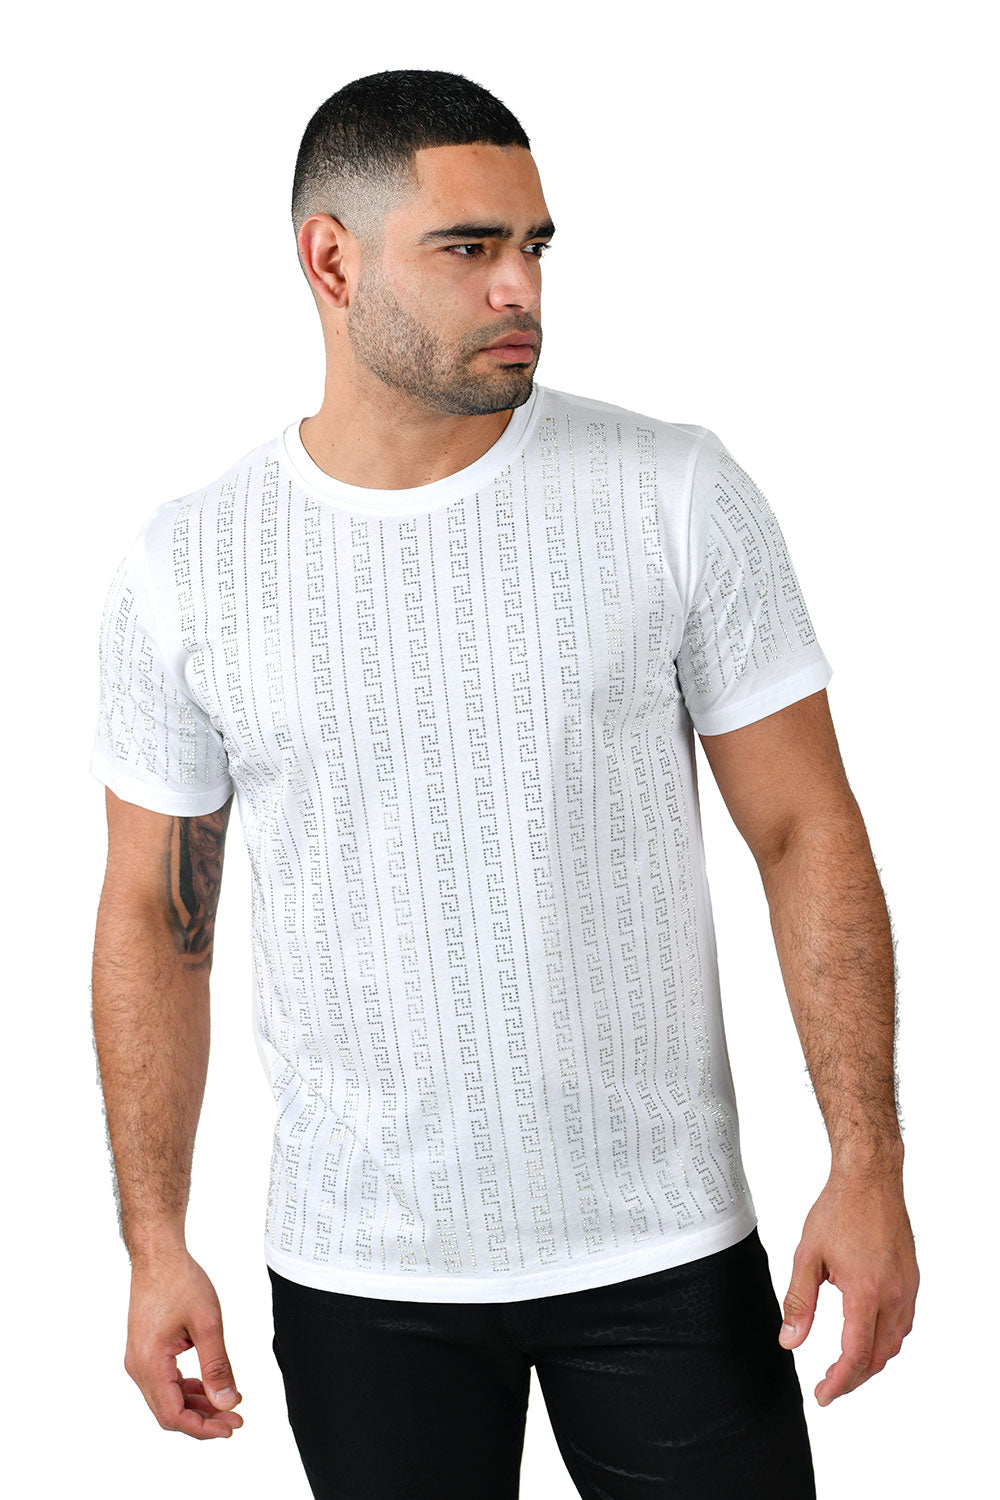 Barabas Men's Crew Neck Greek Key Rhinestone T-shirts ST937 White and Silver